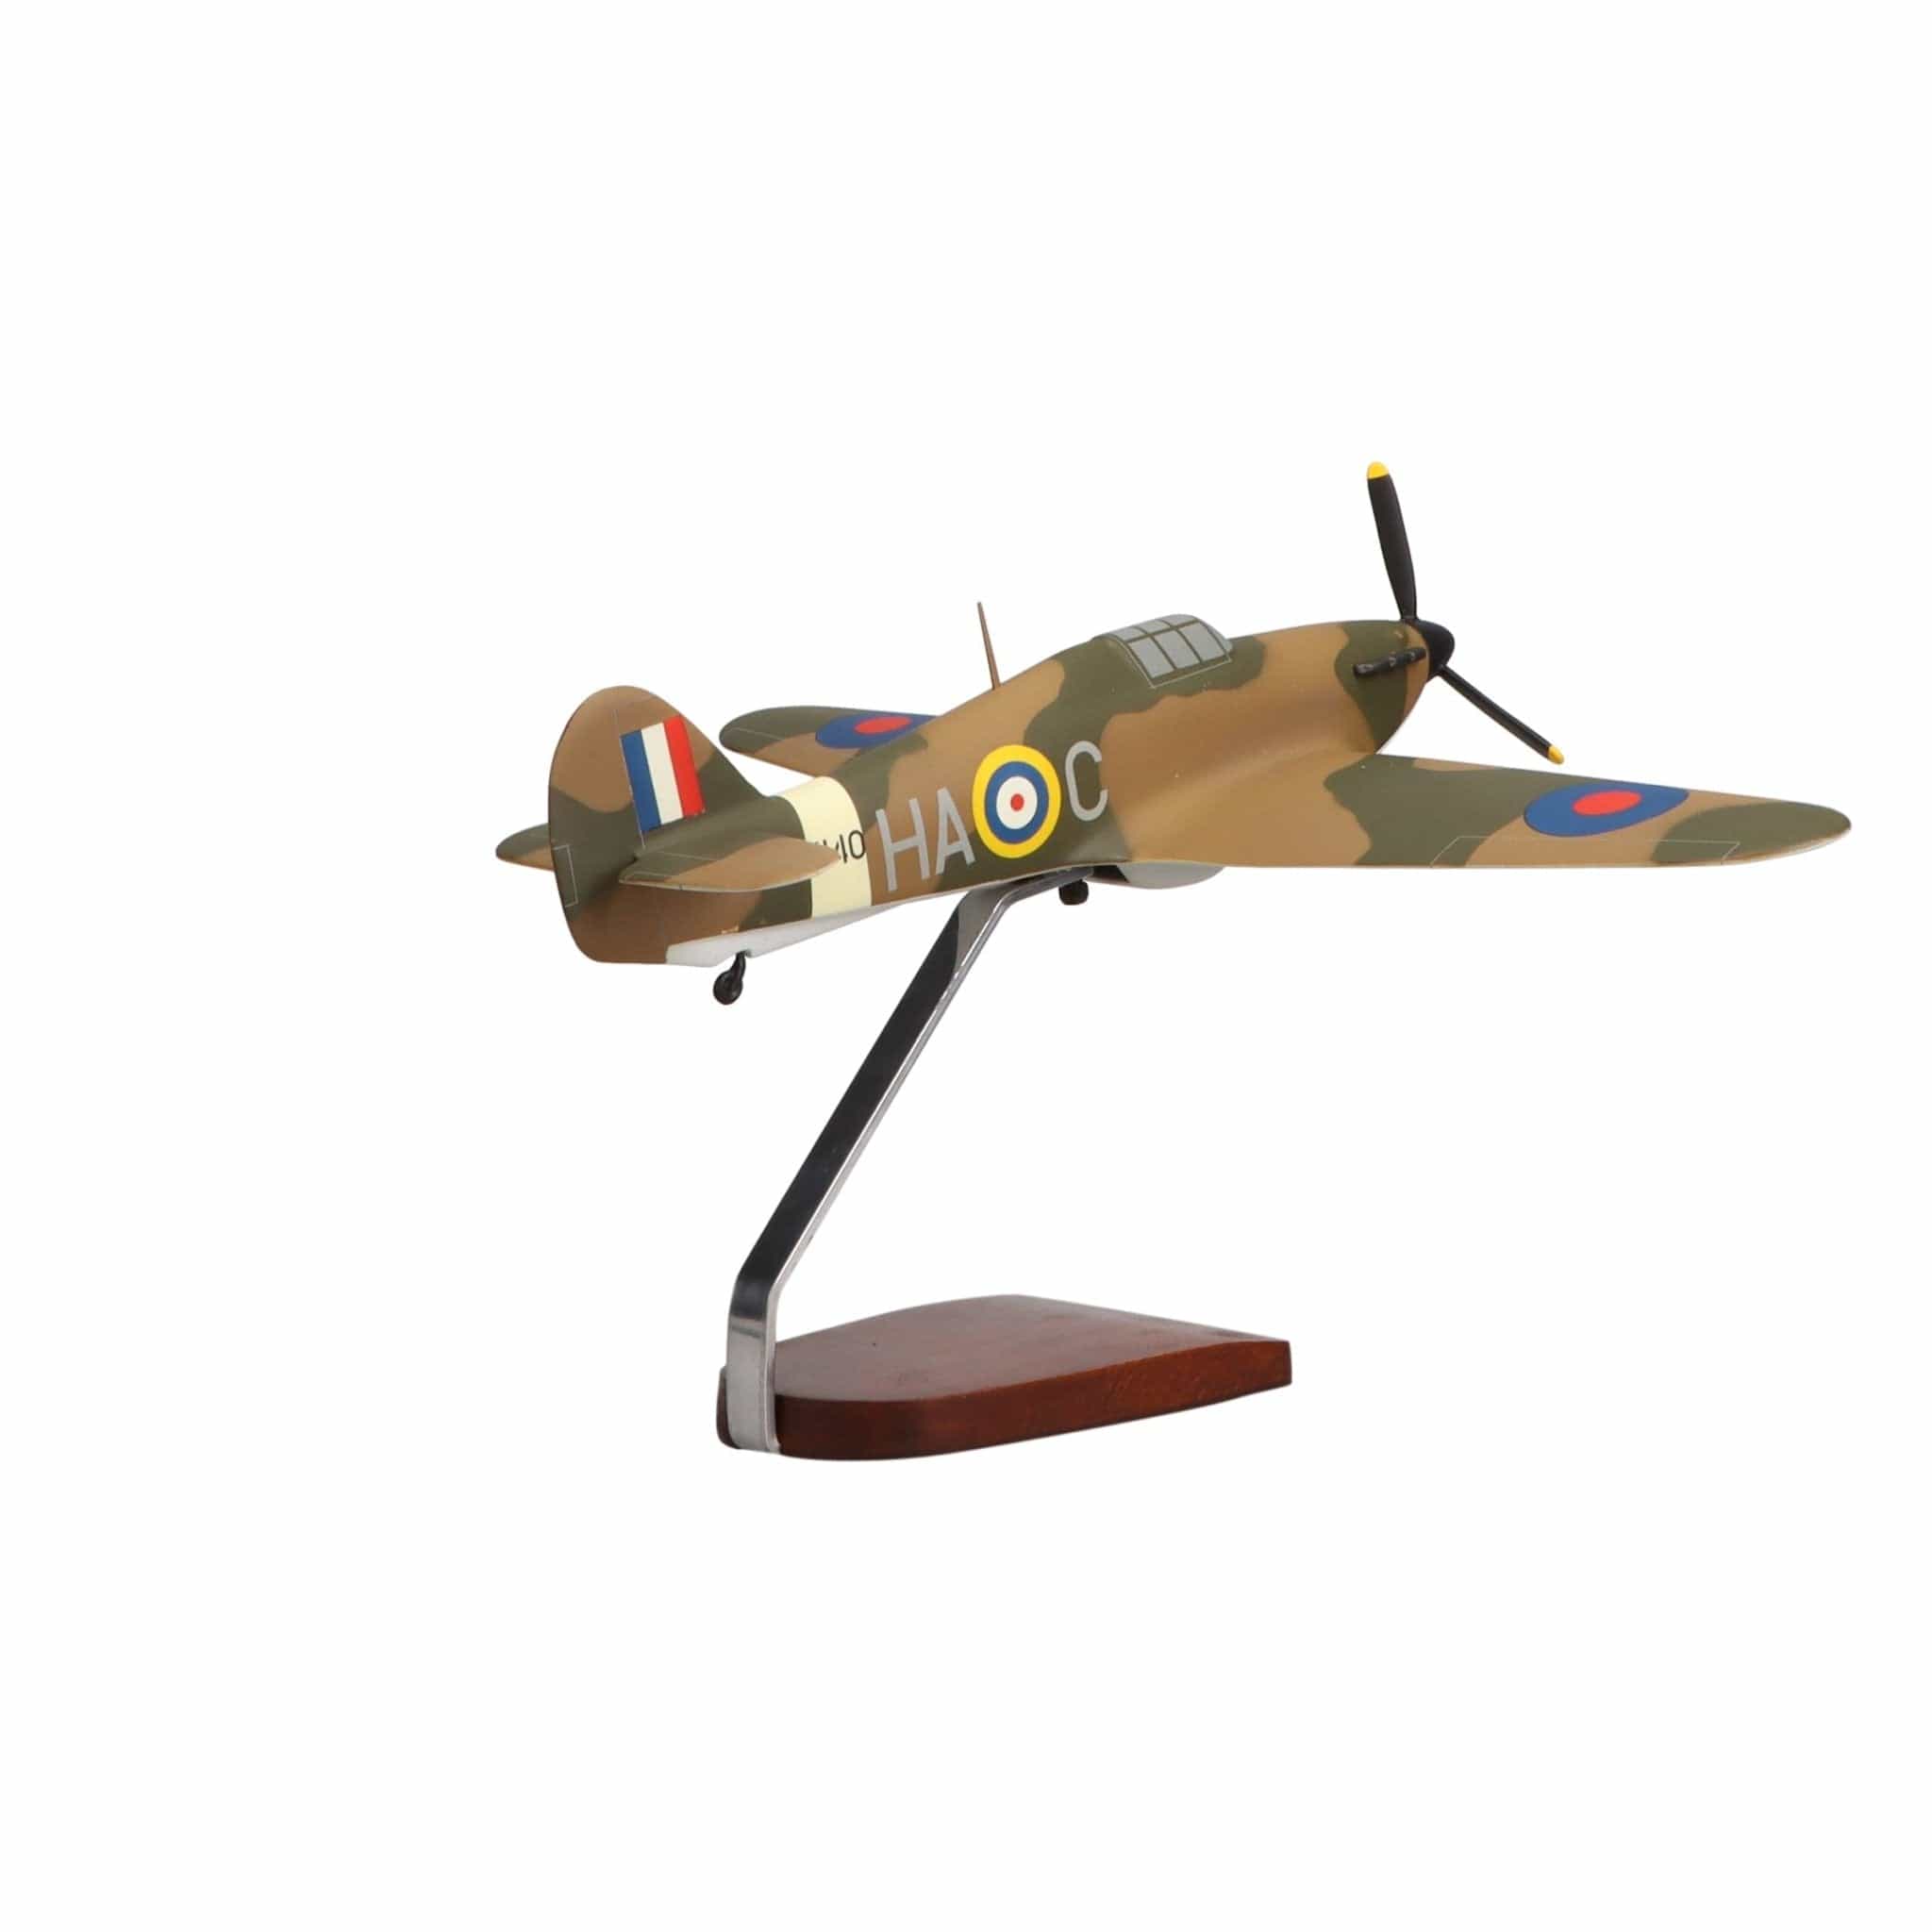 Hawker Hurricane Limited Edition Large Mahogany Model - PilotMall.com